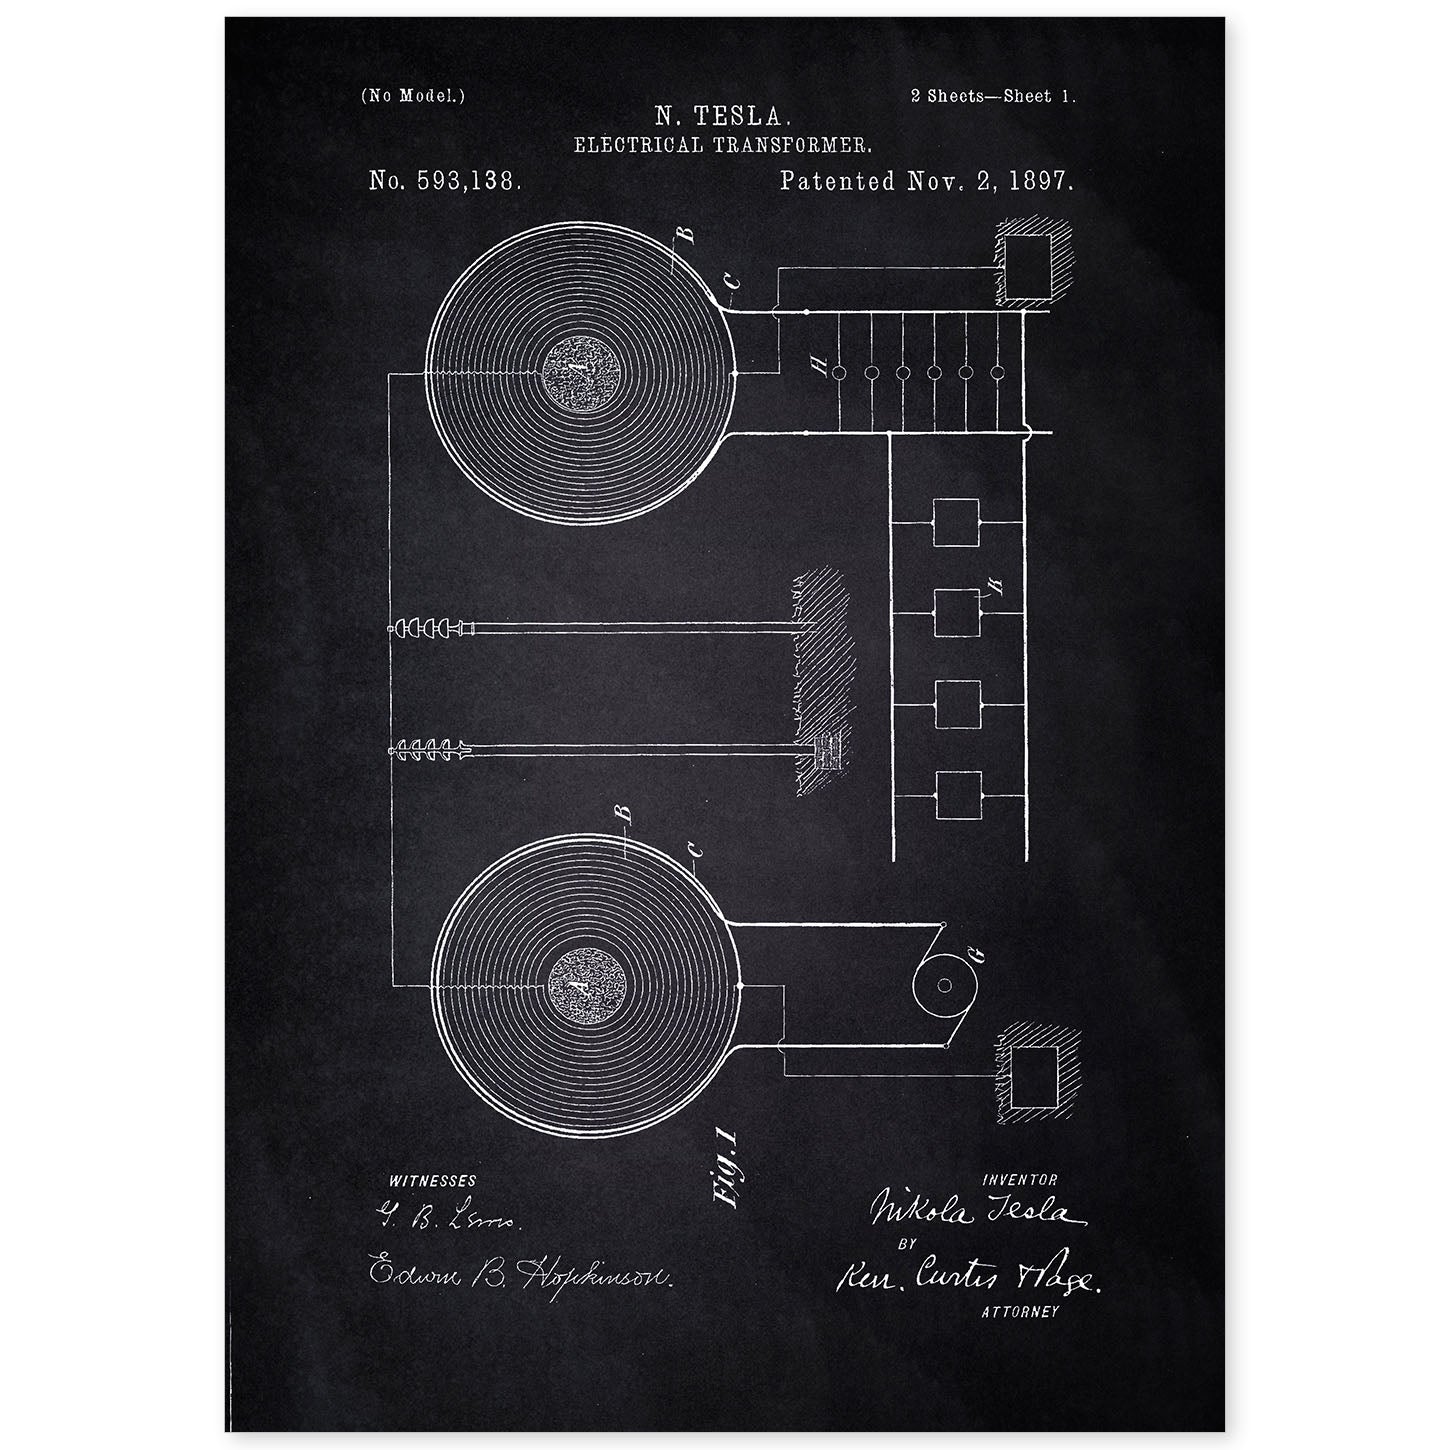 Poster con patente de Transformador electrico. Lámina con diseño de patente antigua-Artwork-Nacnic-A4-Sin marco-Nacnic Estudio SL